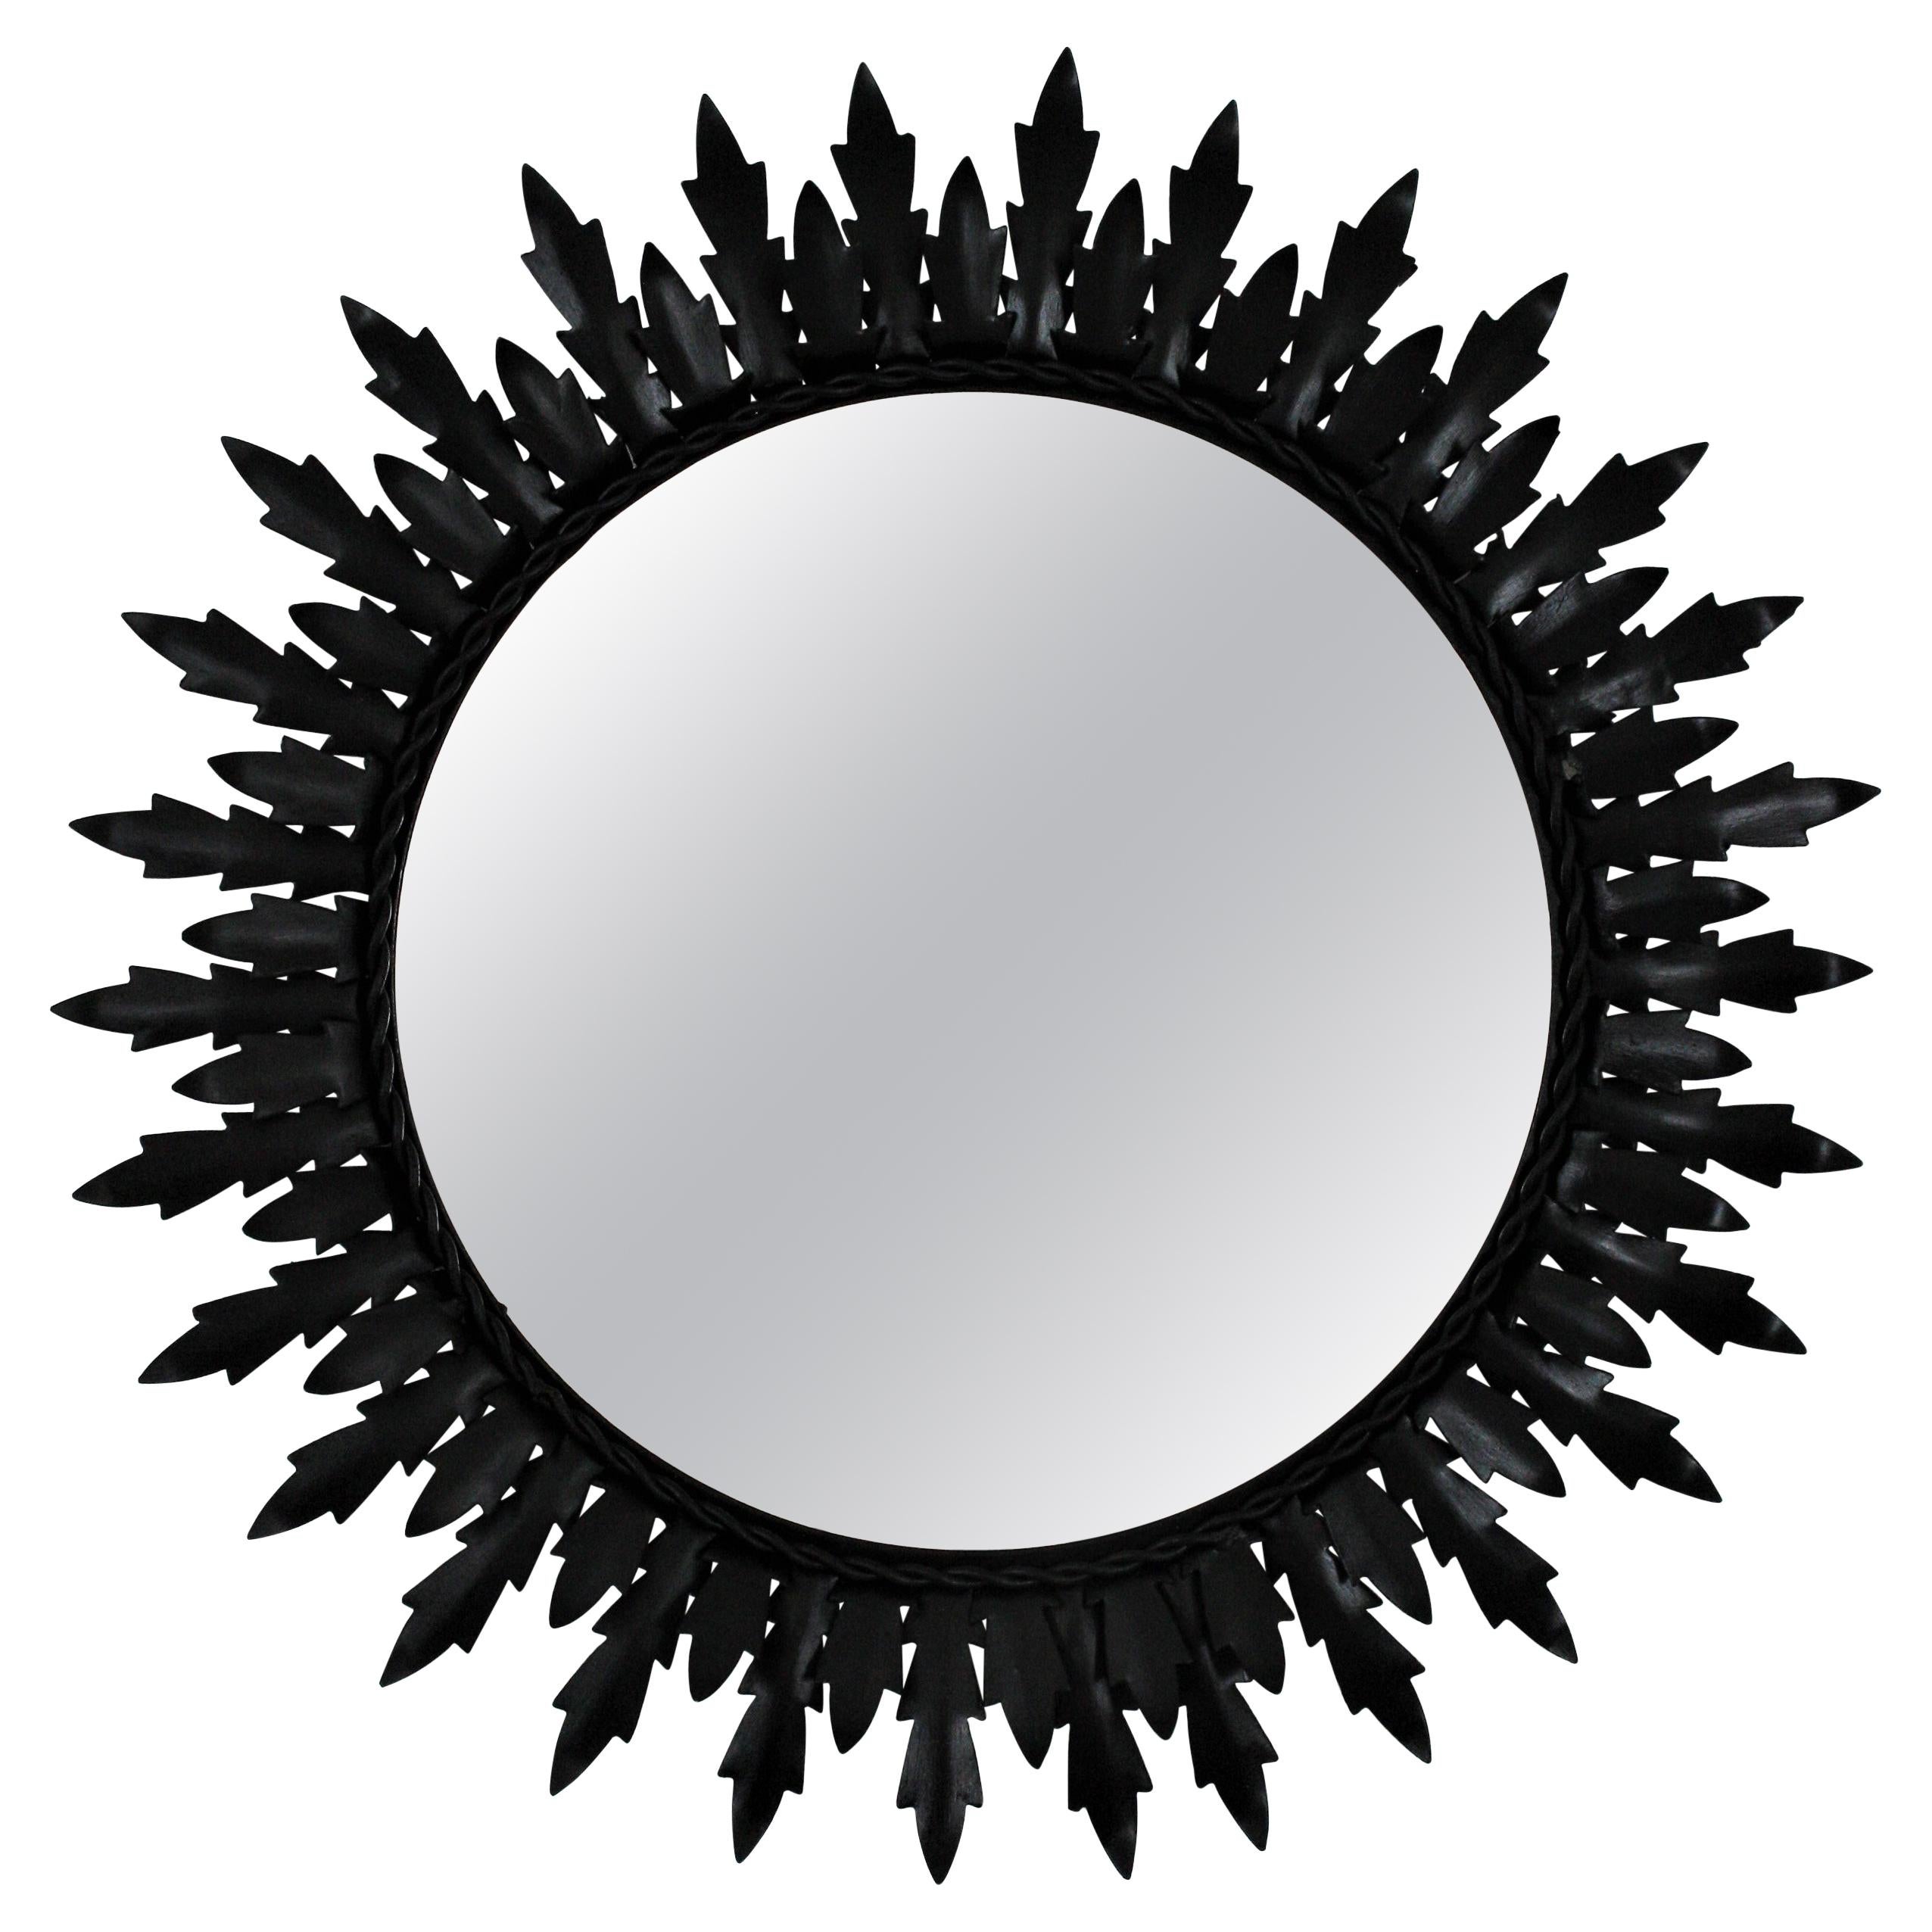 Sunburst Double Layered Mirror in Black Iron